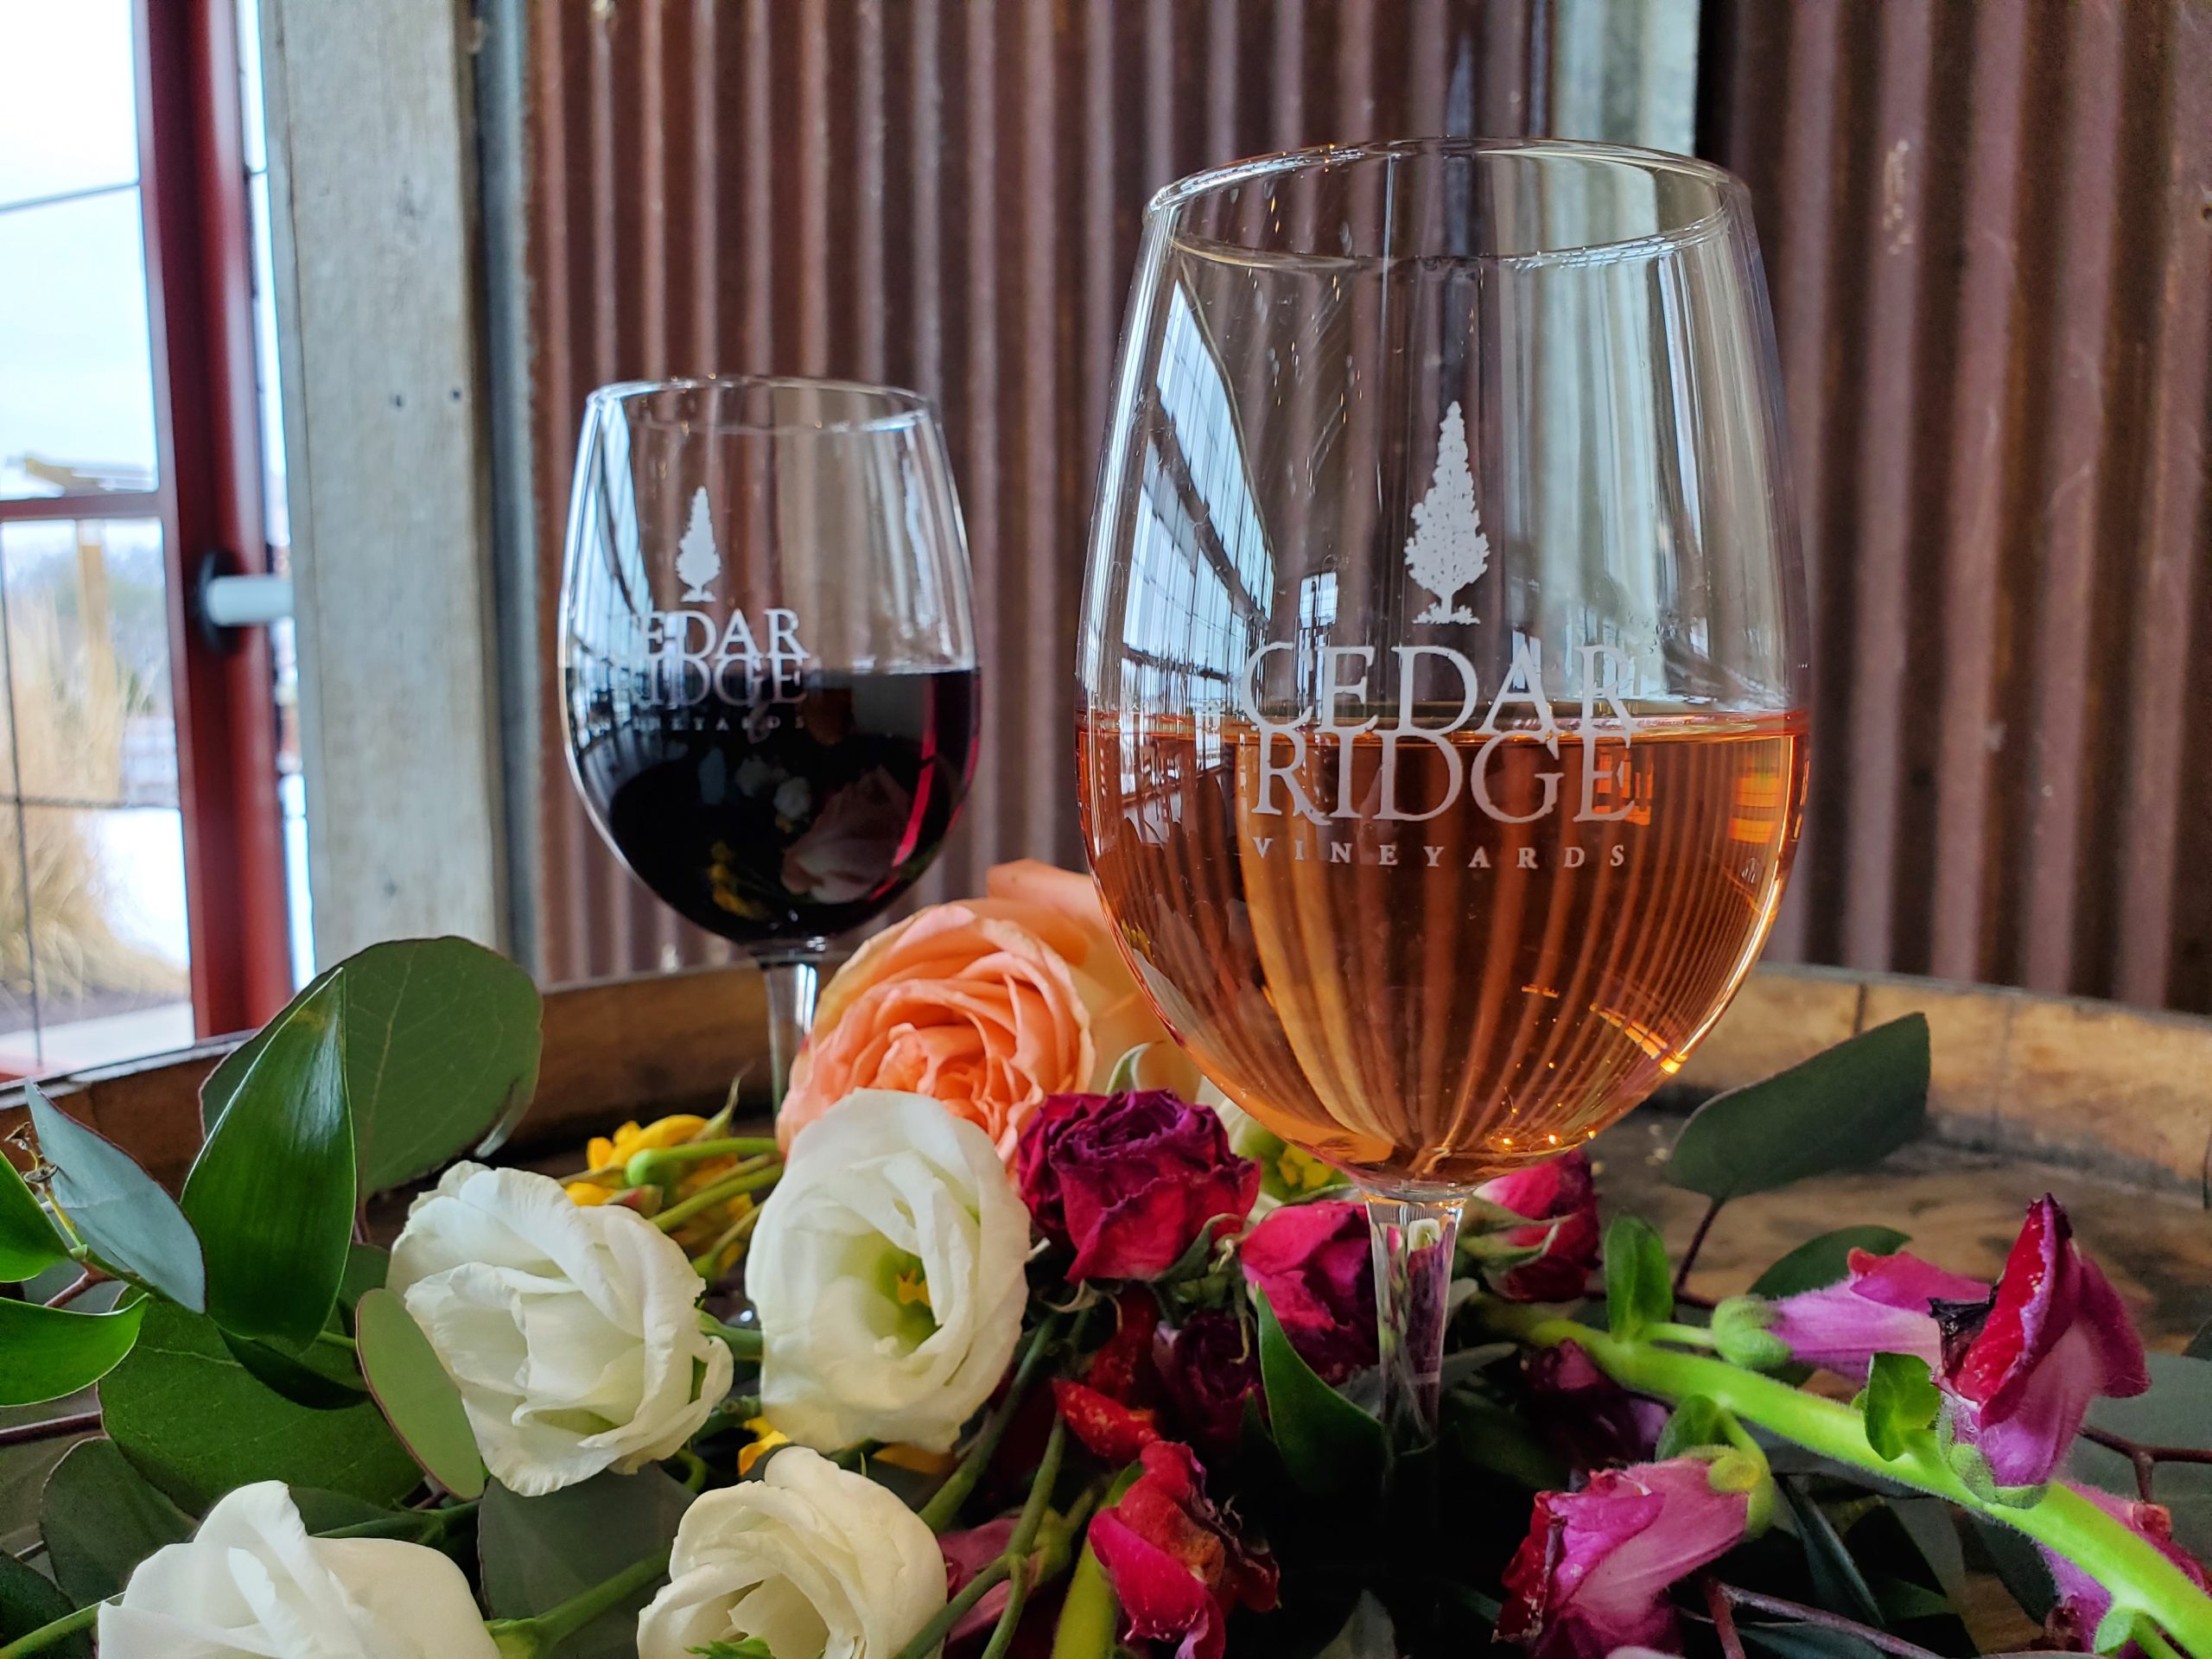 Cedar Ridge wine and flowers